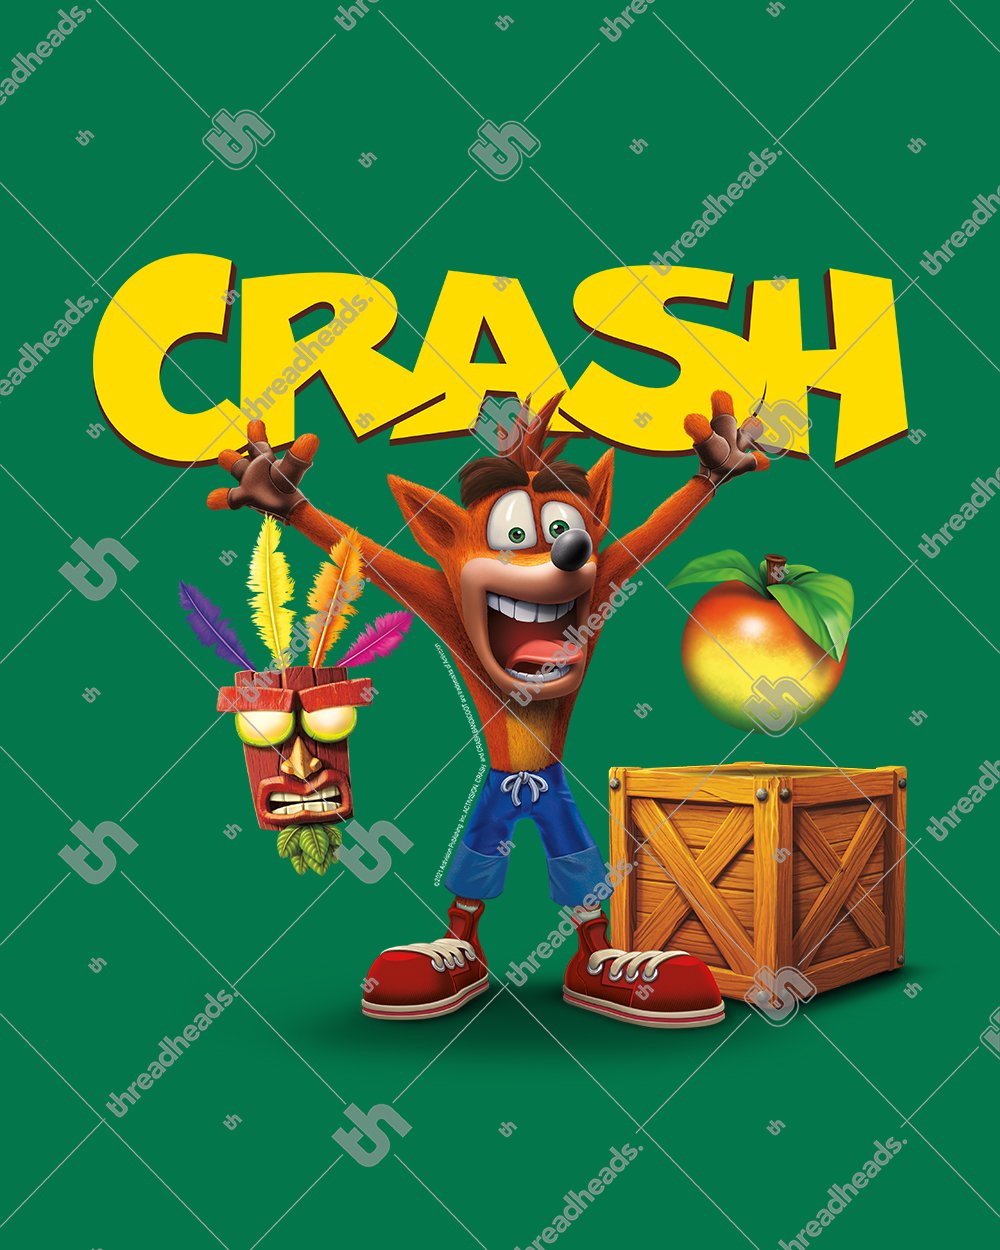 Crash! T-Shirt Australia Online #colour_green